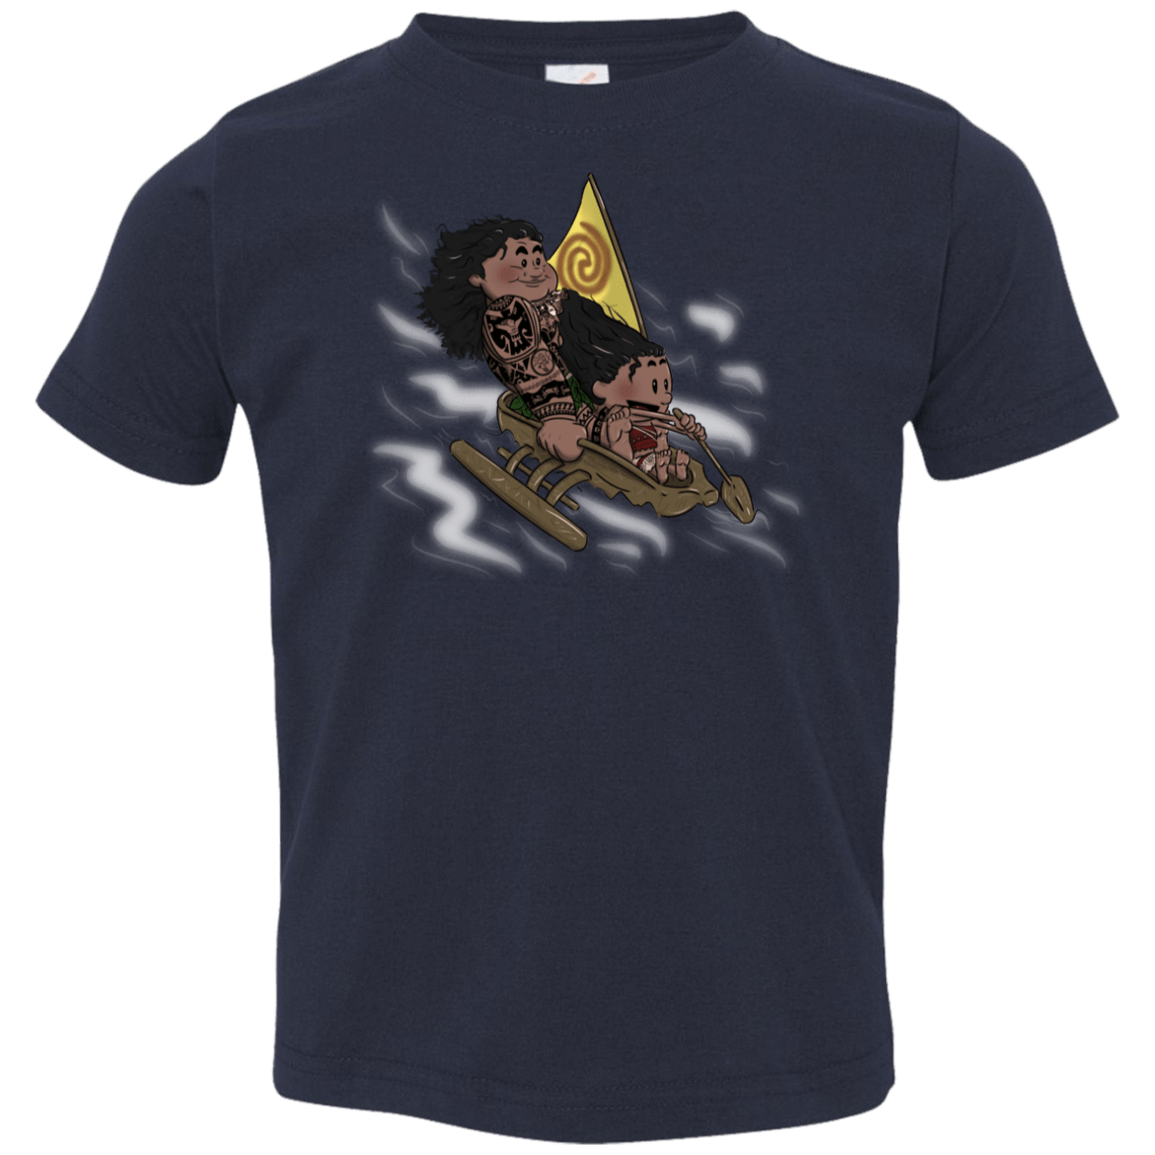 T-Shirts Navy / 2T Cross to The Ocean Toddler Premium T-Shirt